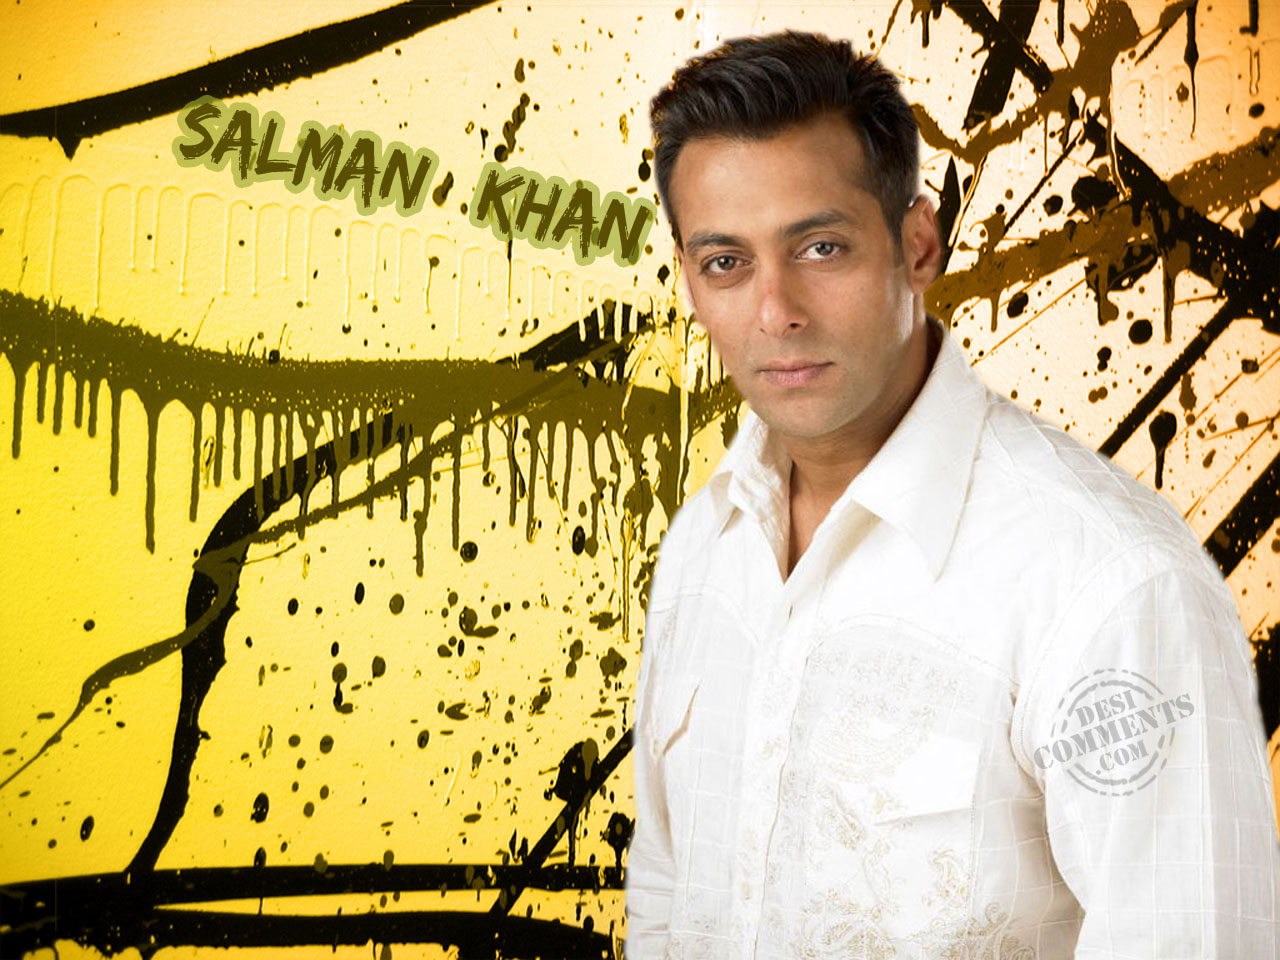 Wallpapers Fitness Salman Khan X 1280x960 #fitness